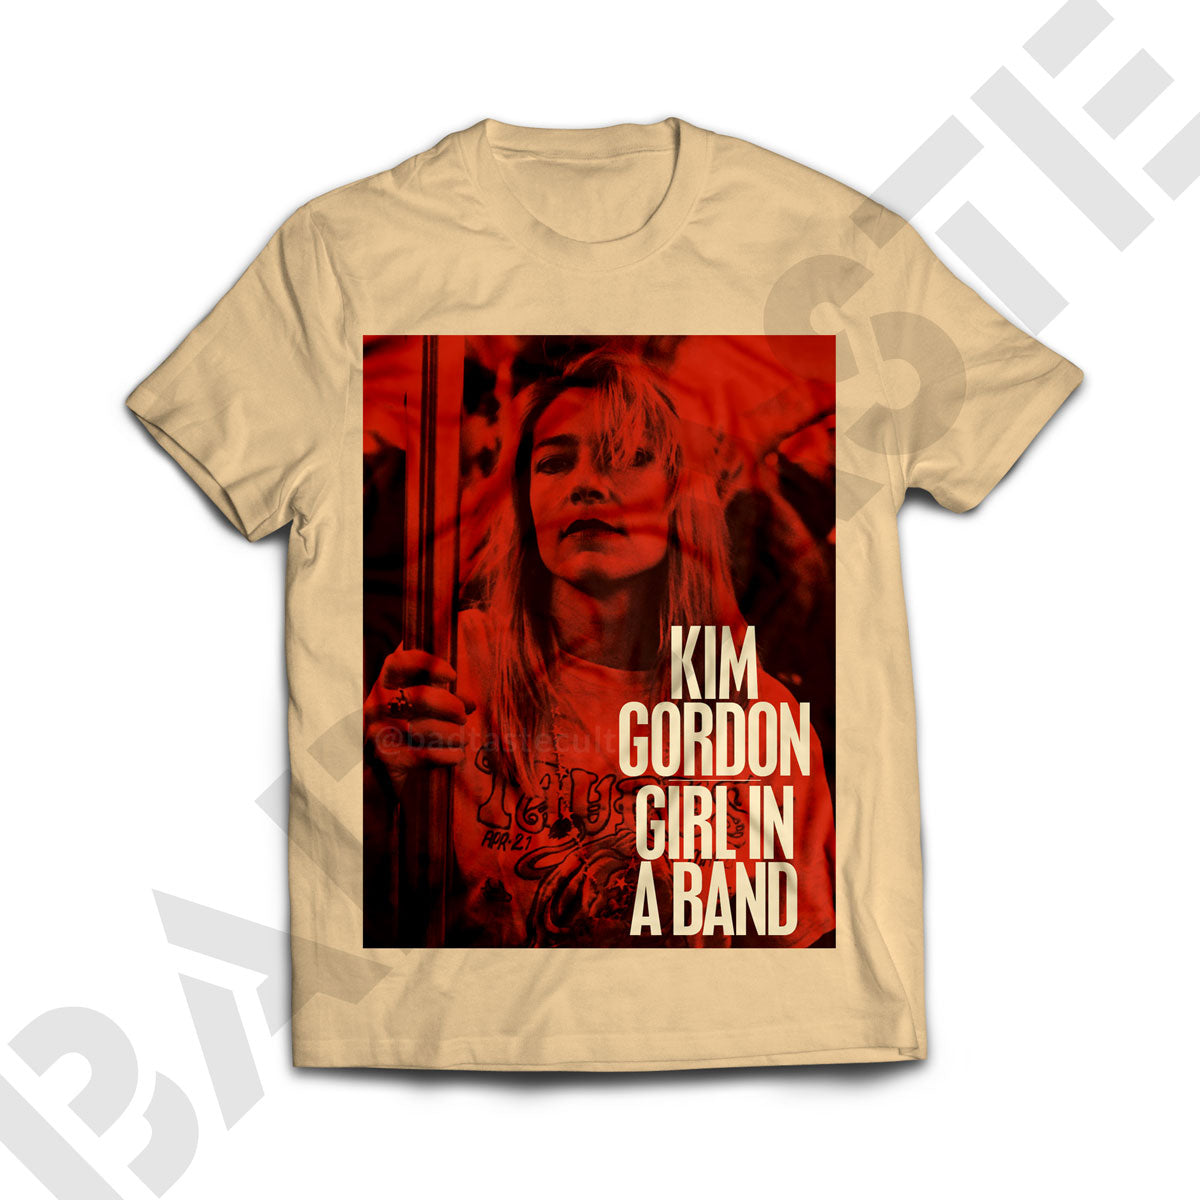 [POLO] Kim Gordon (Sonic Youth) 'Girl in a Band'